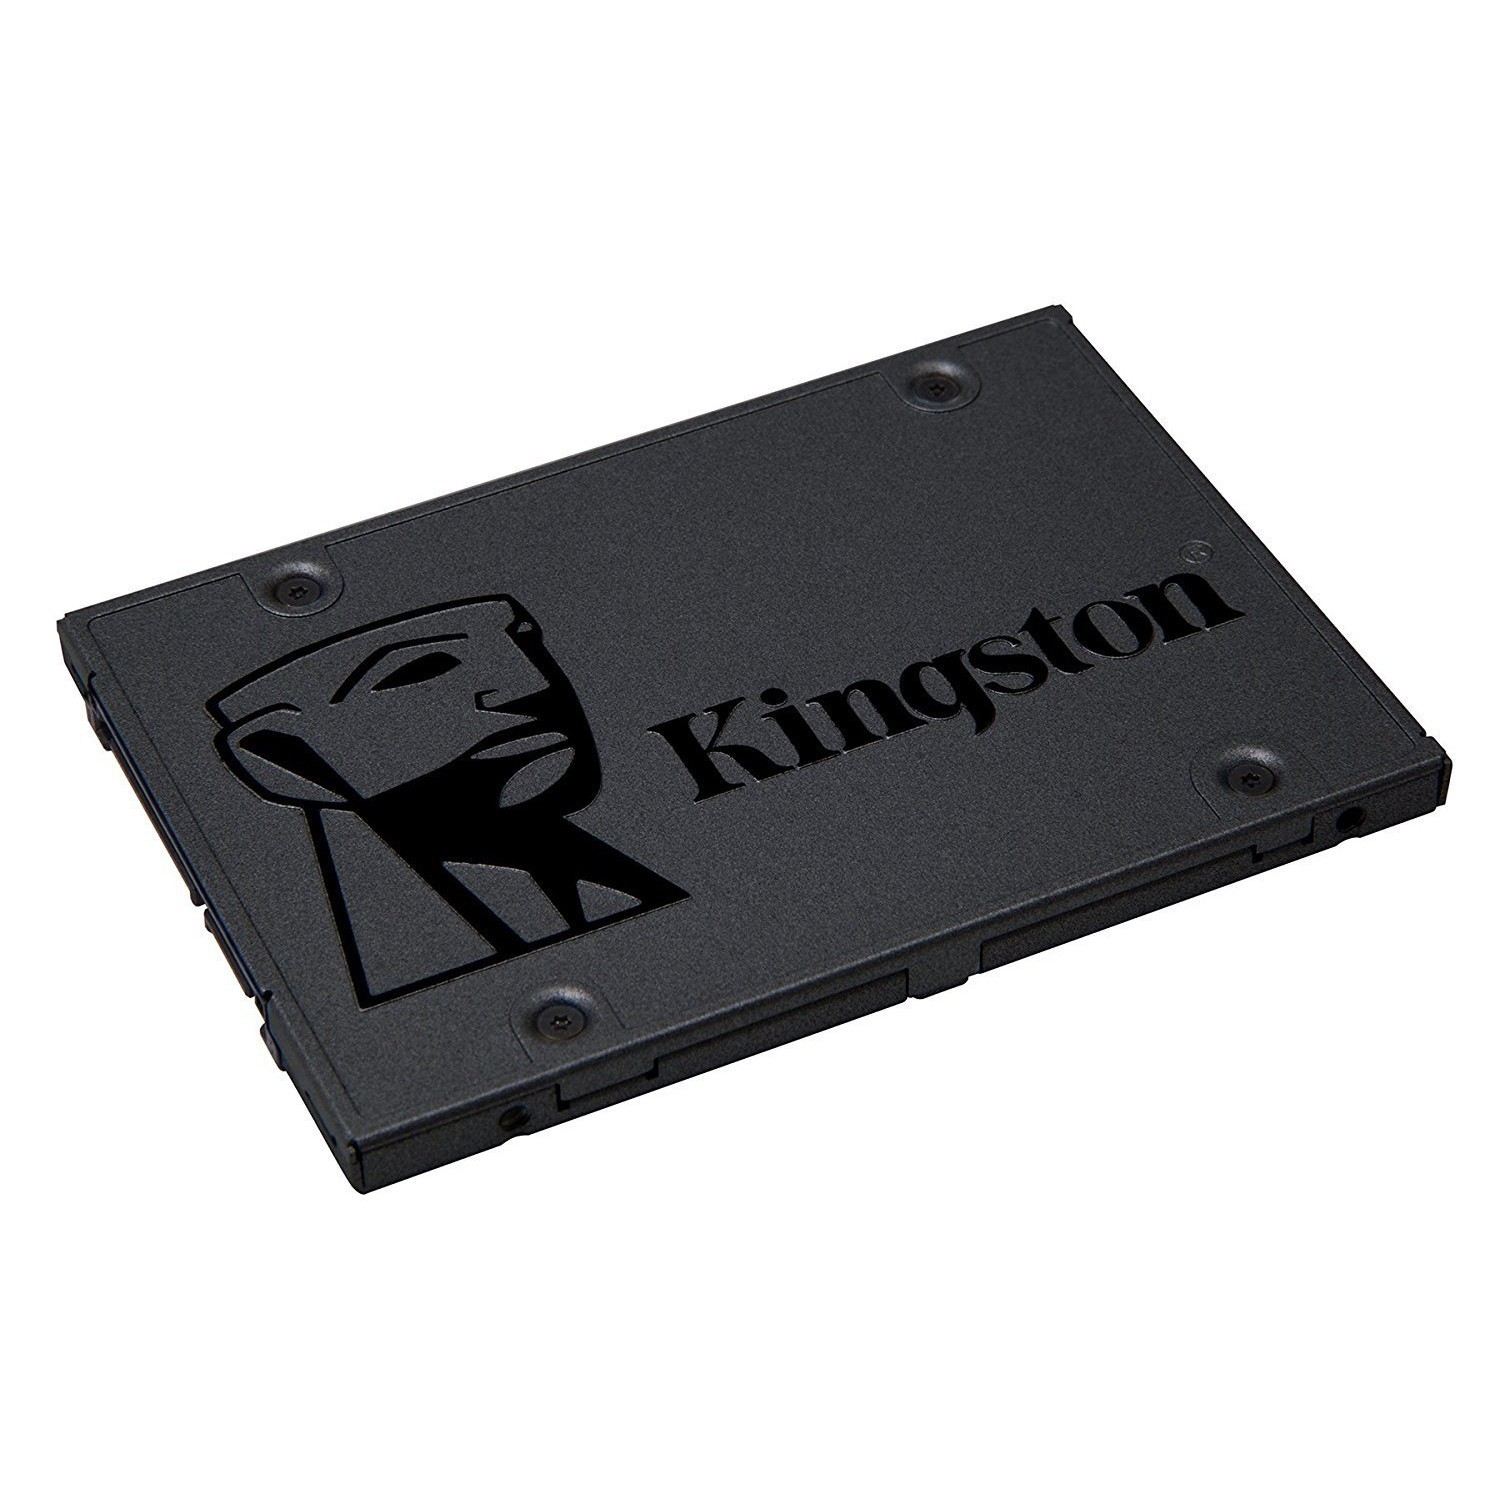 Kingston A400 SSD 120GB SATA 3 2.5” Solid State Drive SA400S37/120G - Increase Performance